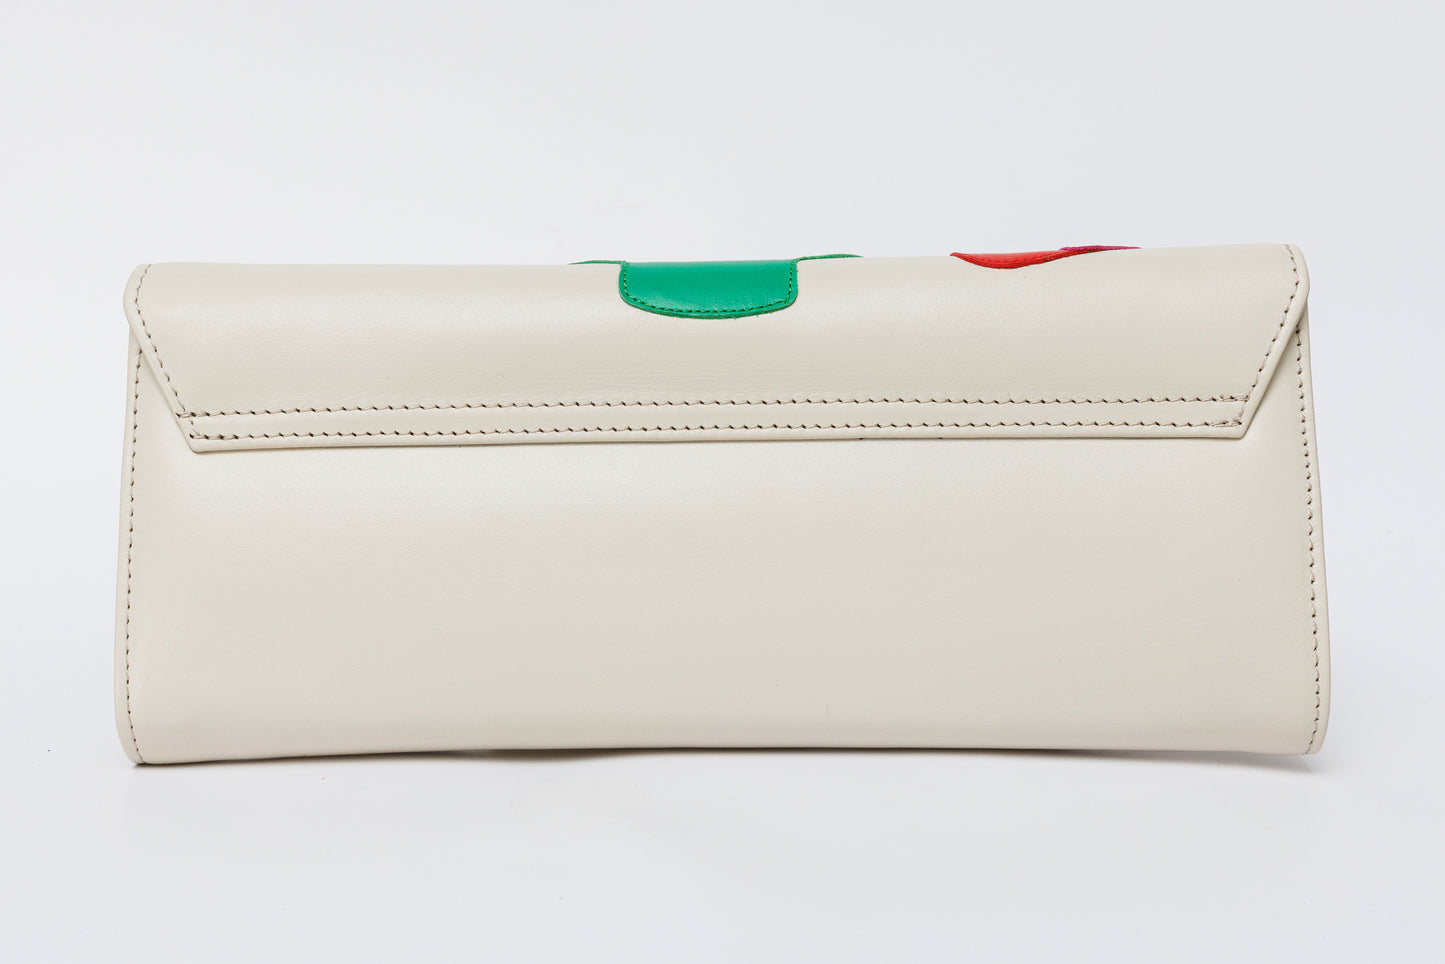 The Tario Cream Leather Handbag